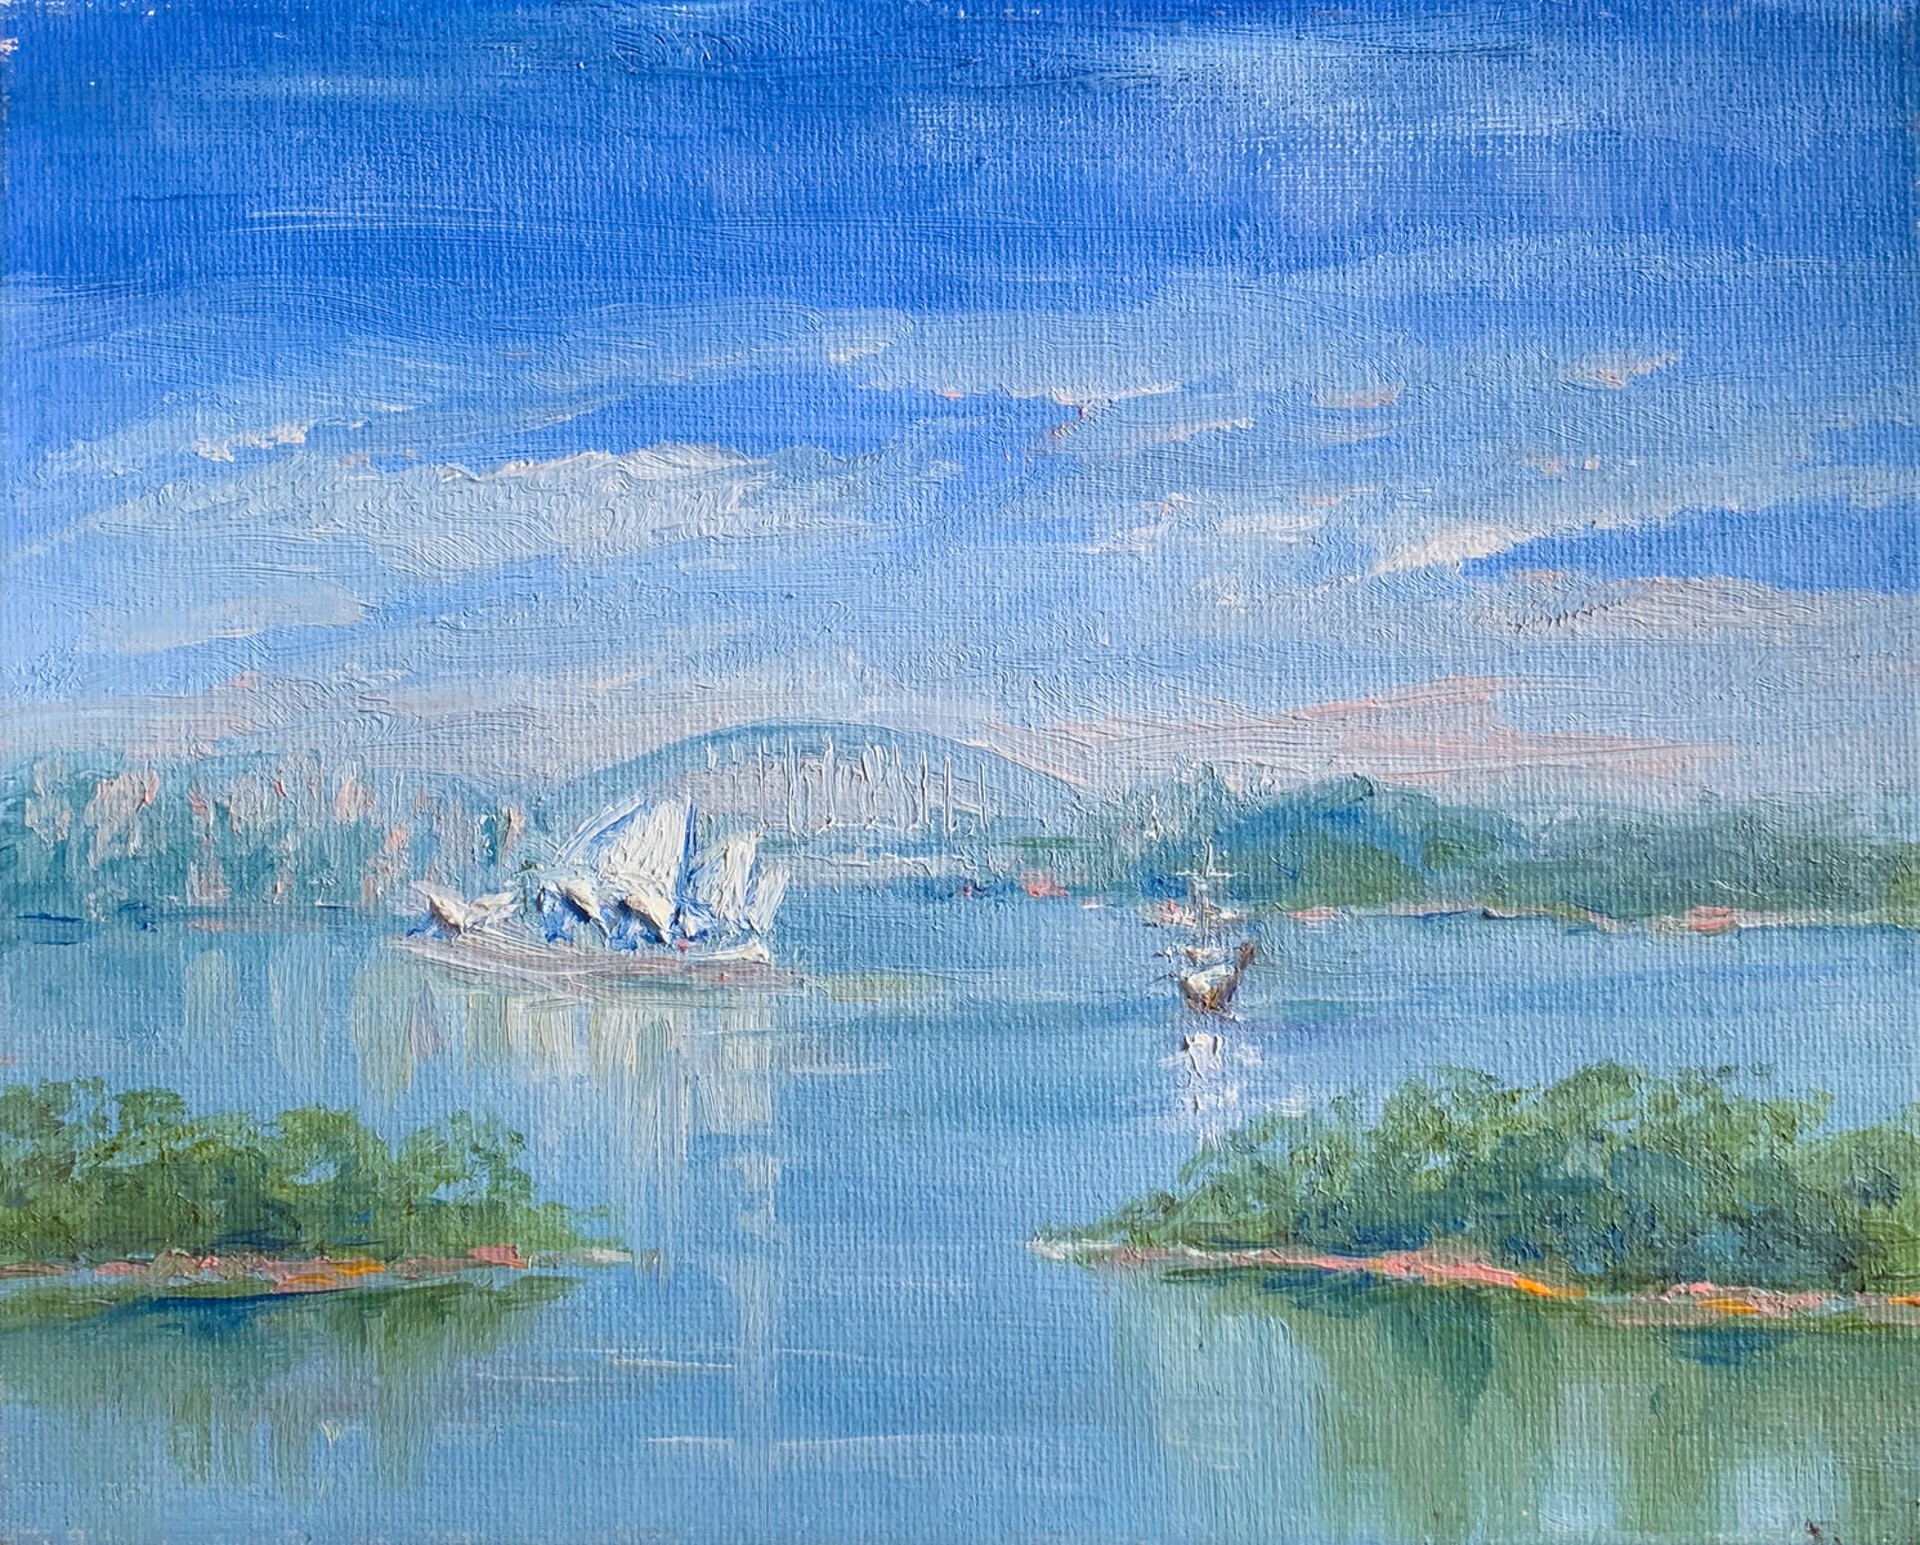 Midsummer Sydney by Lorraine Hamilton